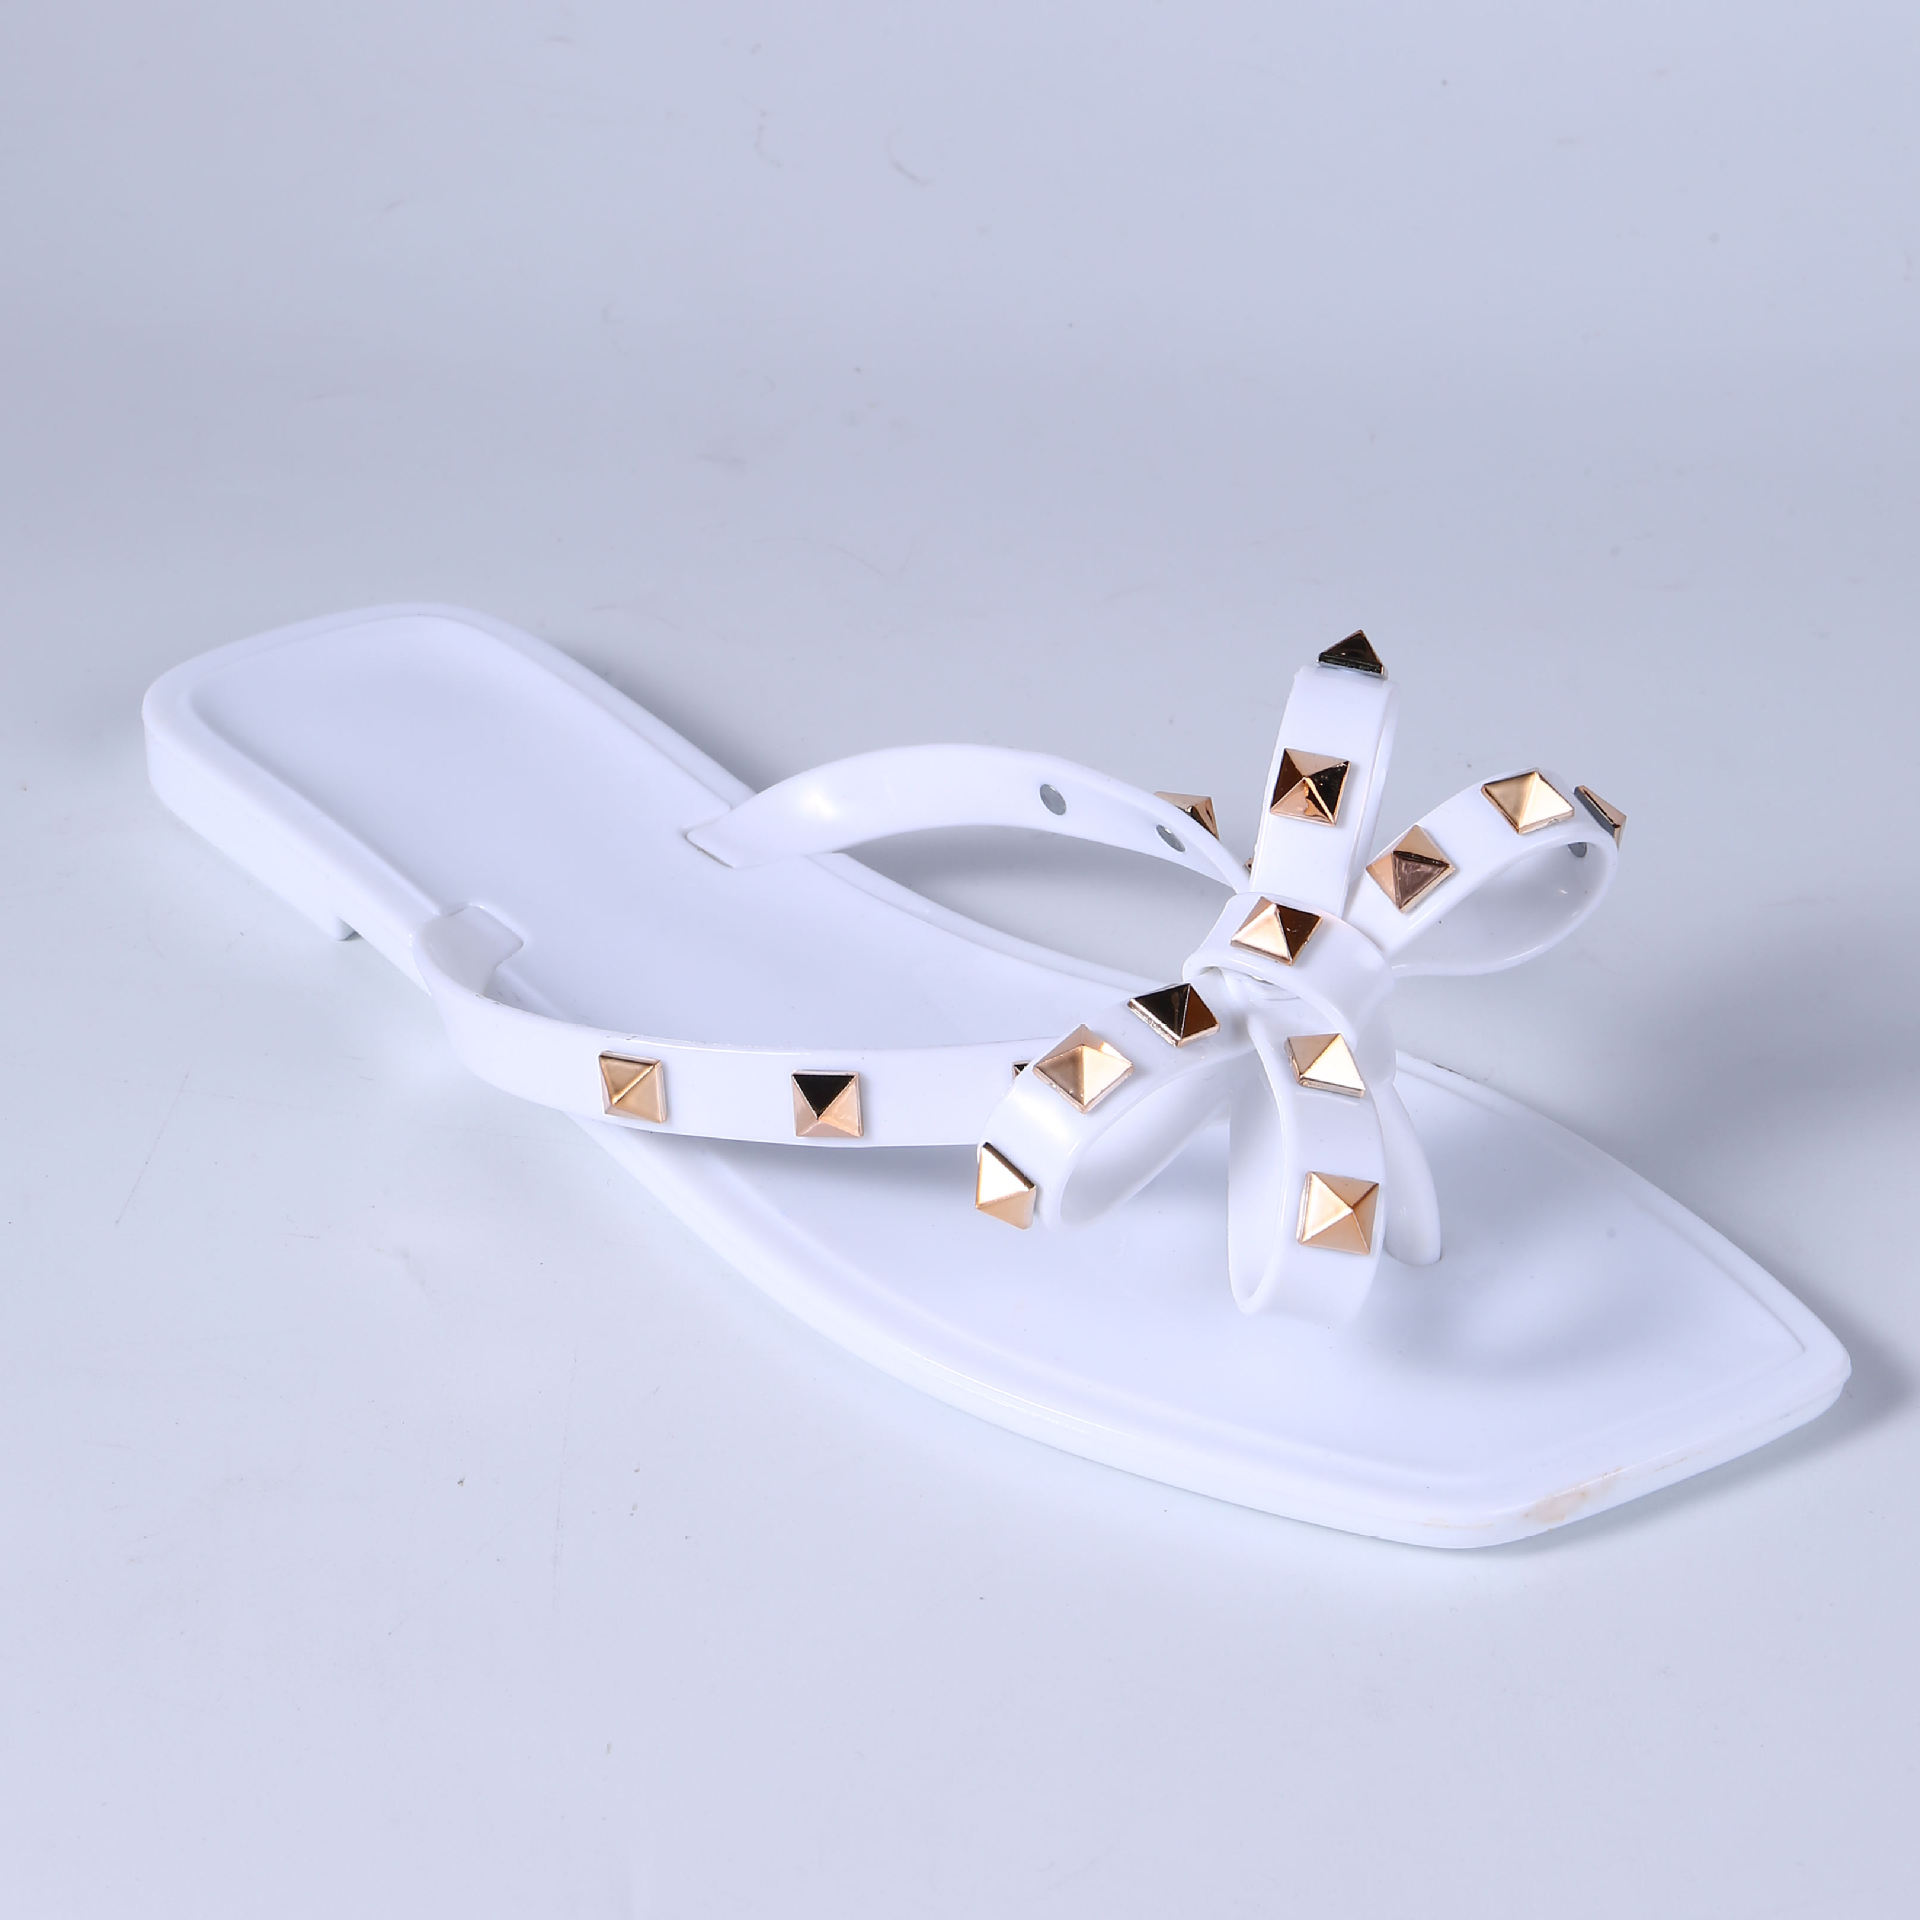 Cross-Border Hot Fashion Crystal Sandals Women's Beach Gel Shoes Fashion Non-Slip Rivet Flip Flops Gel Shoes